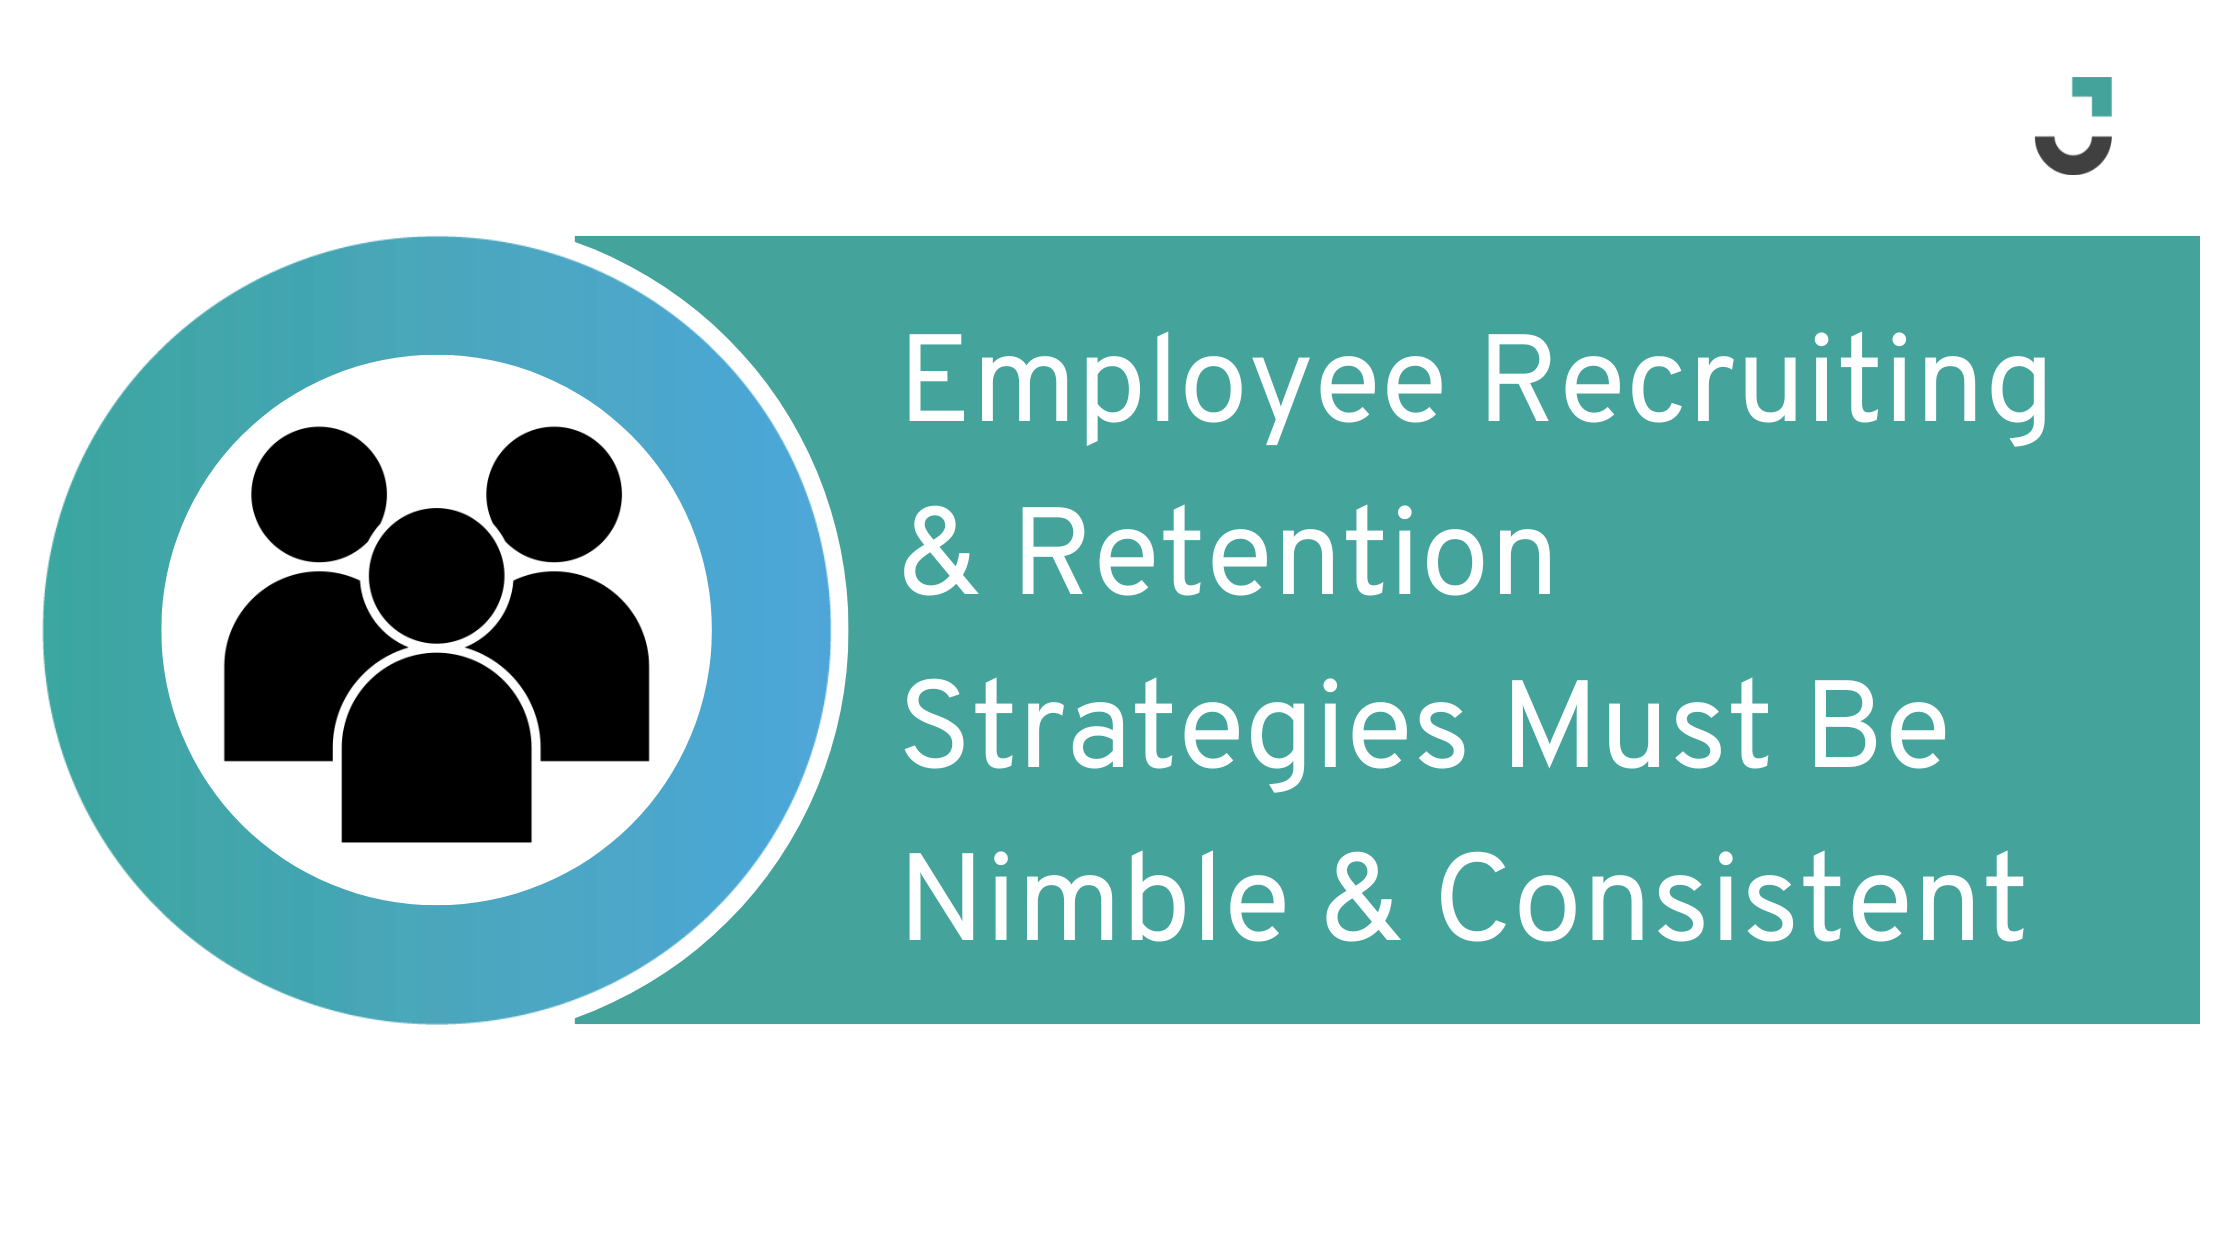 Employee Recruiting & Retention Strategies Must Be Nimble & Consistent